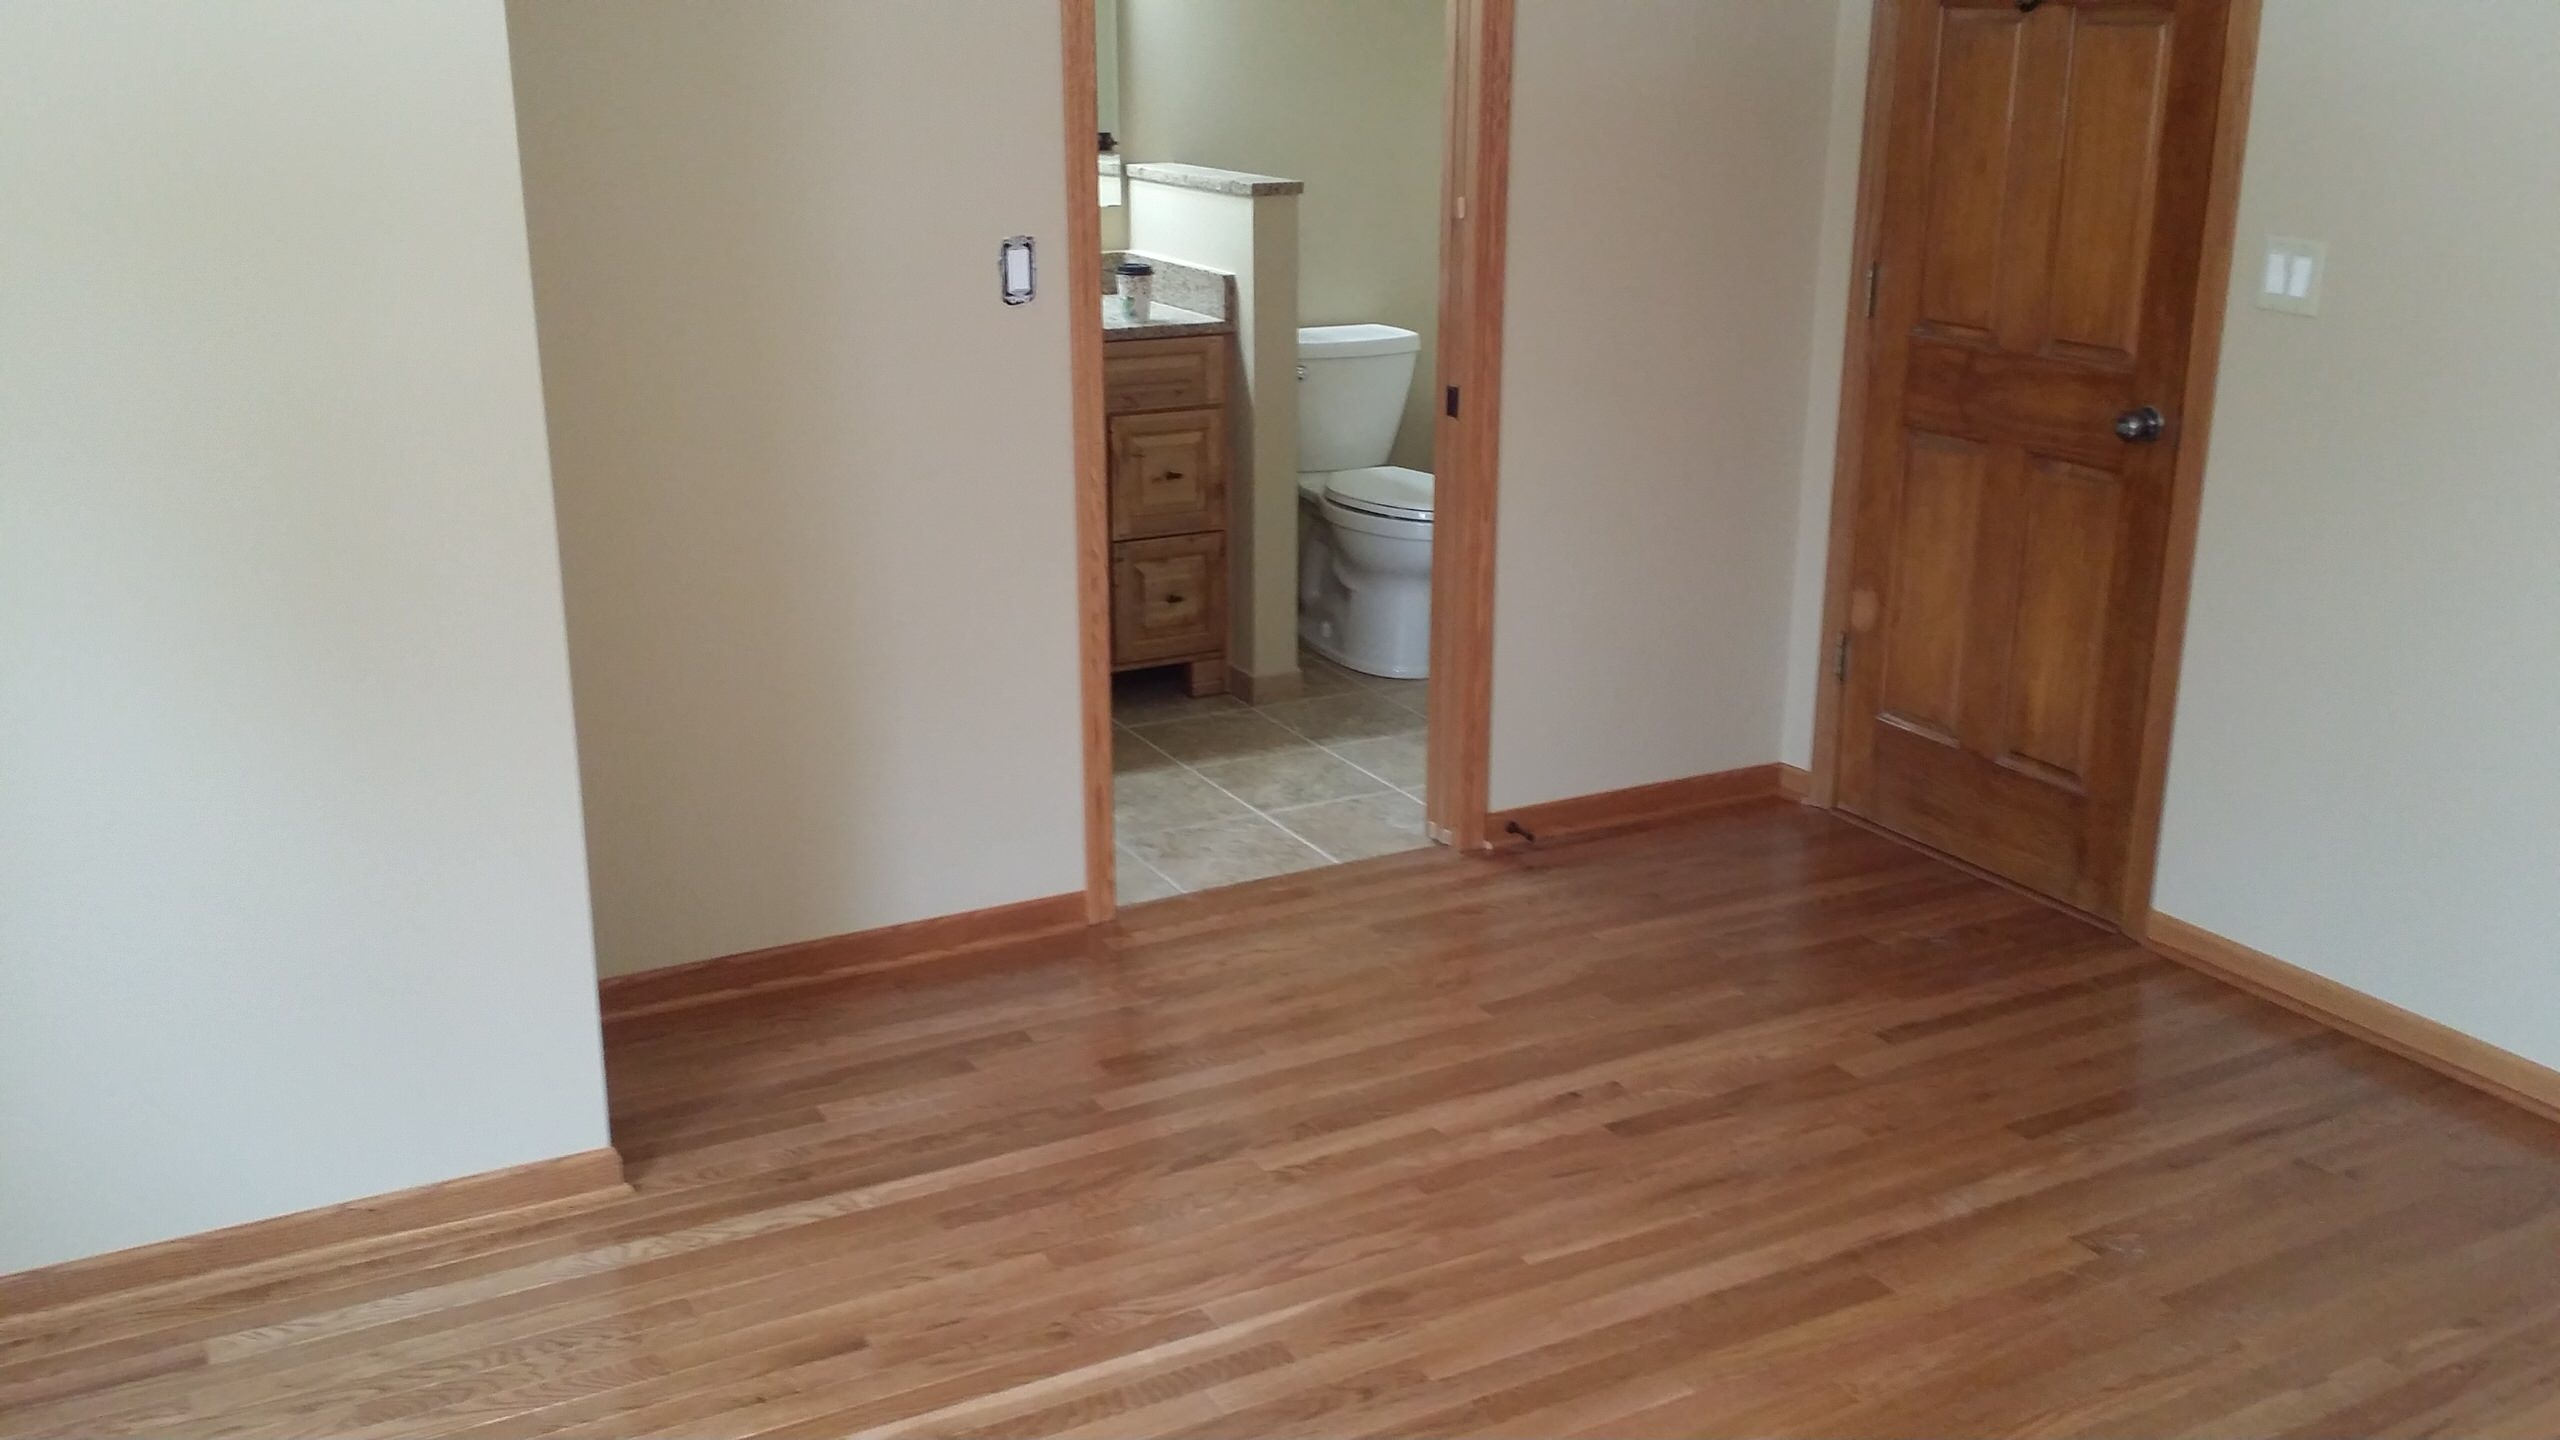 New hardwood flooring and trim